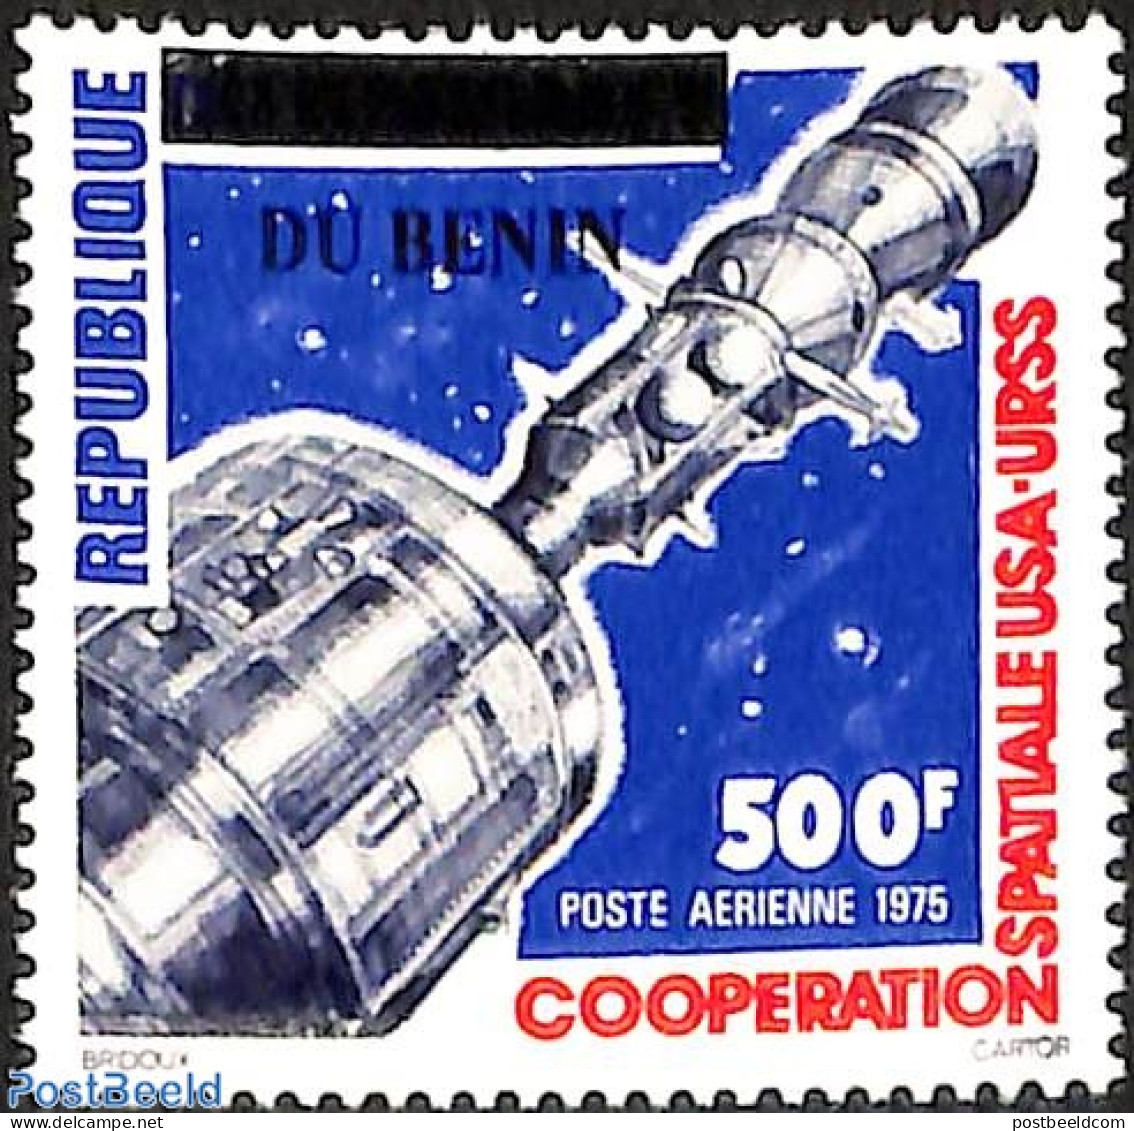 Barbuda 2007 Cooperation USA USSR Space Exploration, Set Of 2 Stamps, Overprint, Mint NH, Transport - Various - Space .. - Fouten Op Zegels